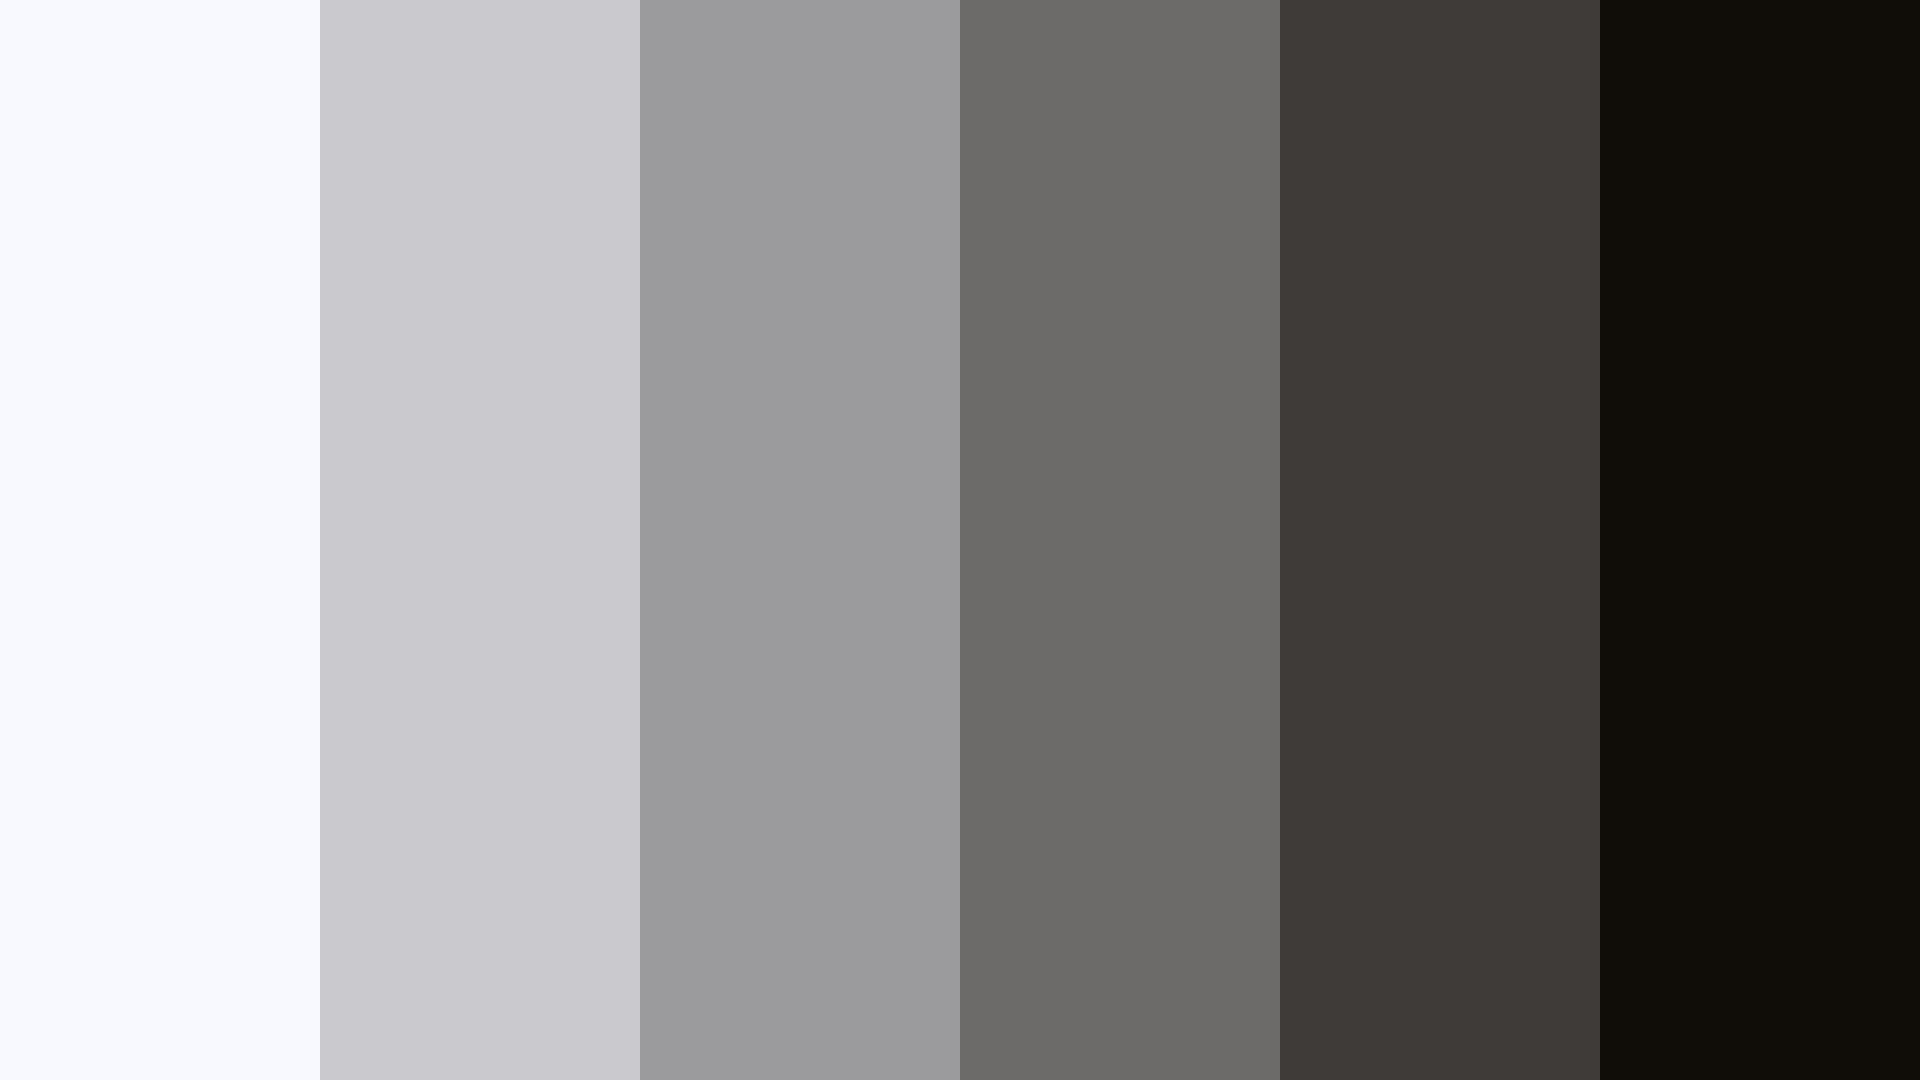 Black To White Gradient Background